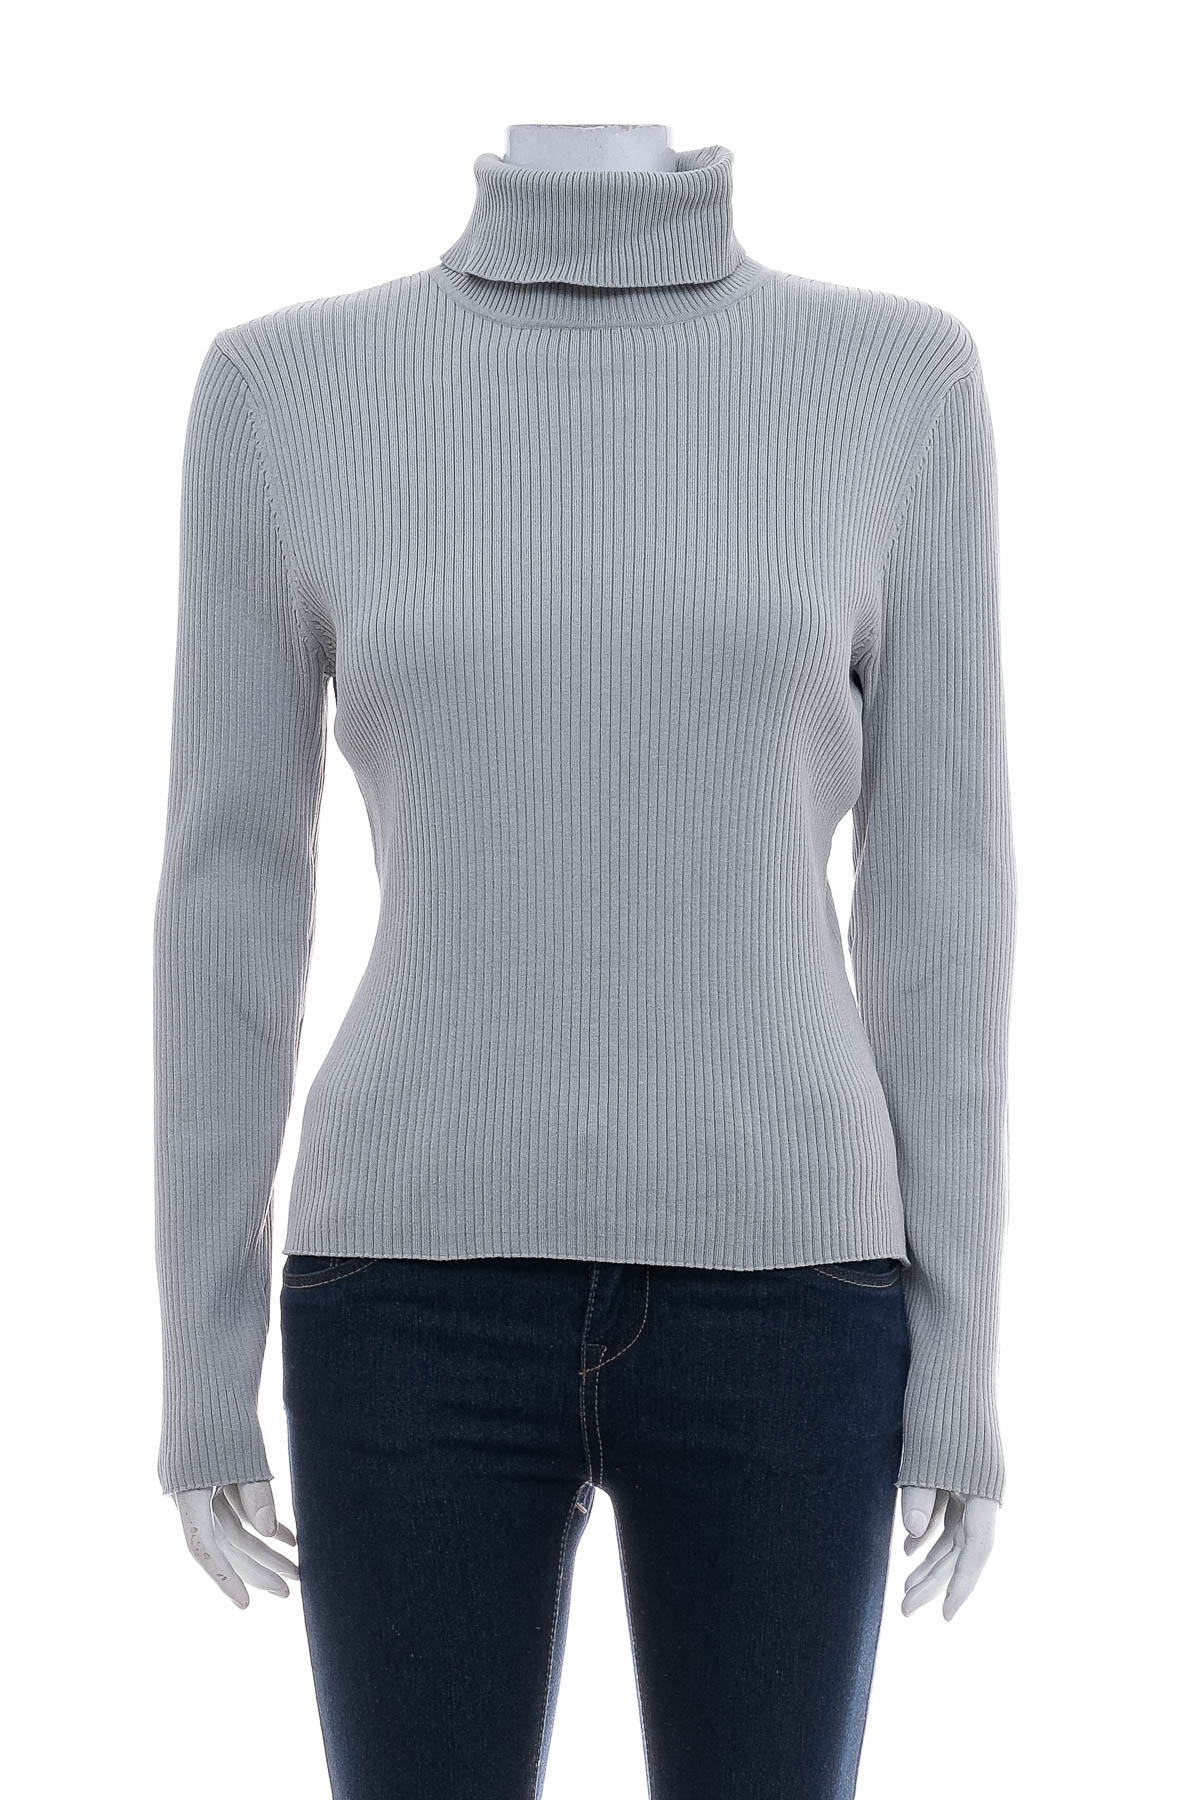 Women's sweater - August Silk - 0